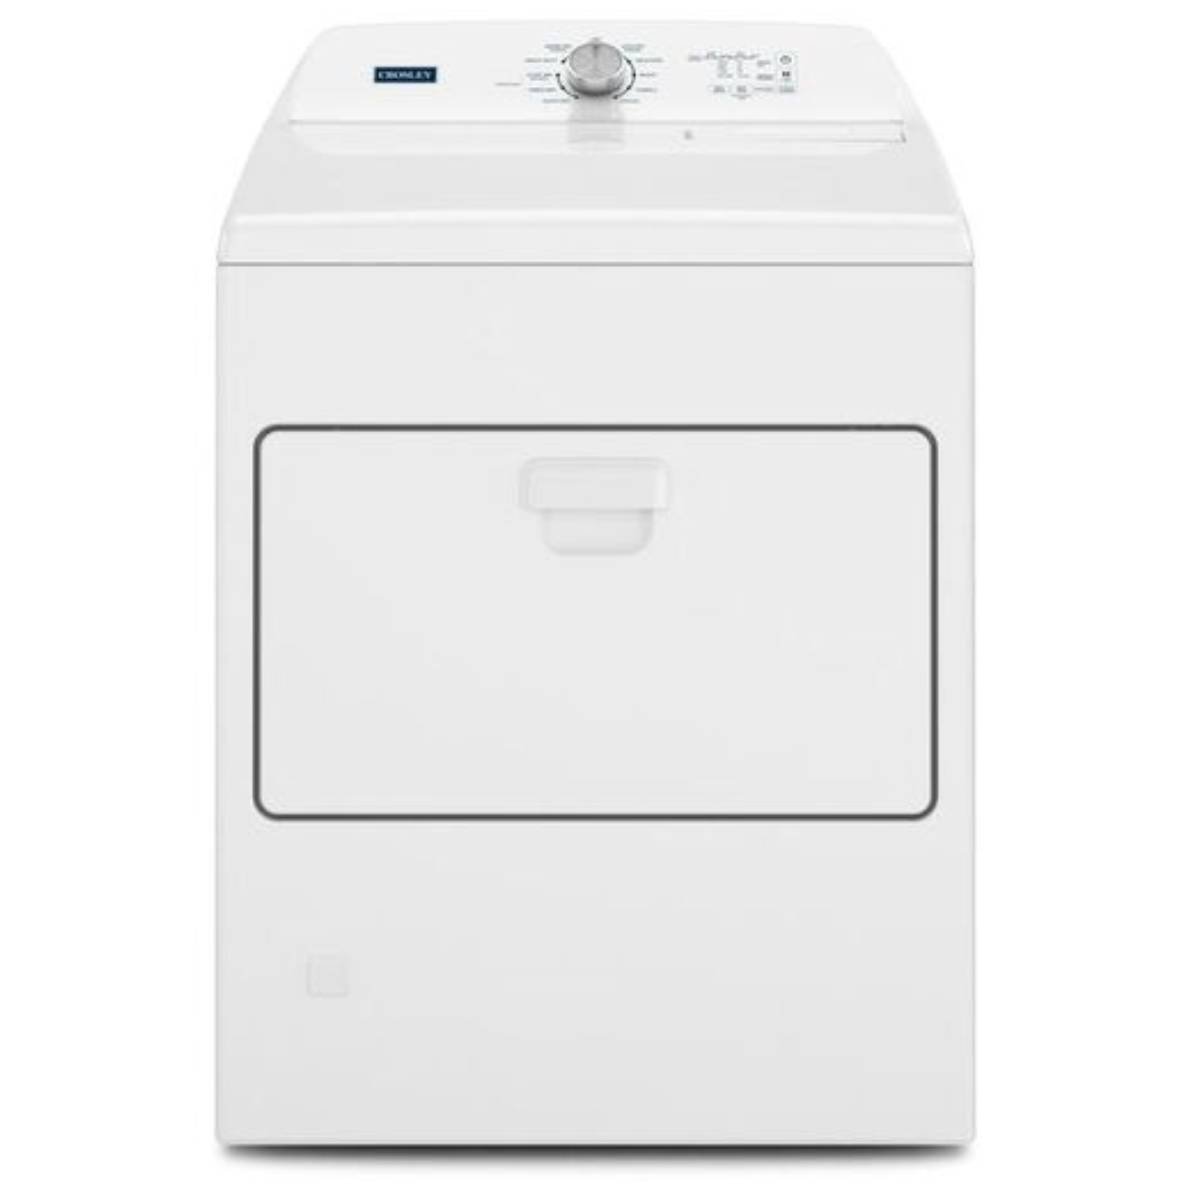 Crosley 7.0 cu. ft. CED7011LW Electric Dryer $659.00 90 Days Same as Cash*